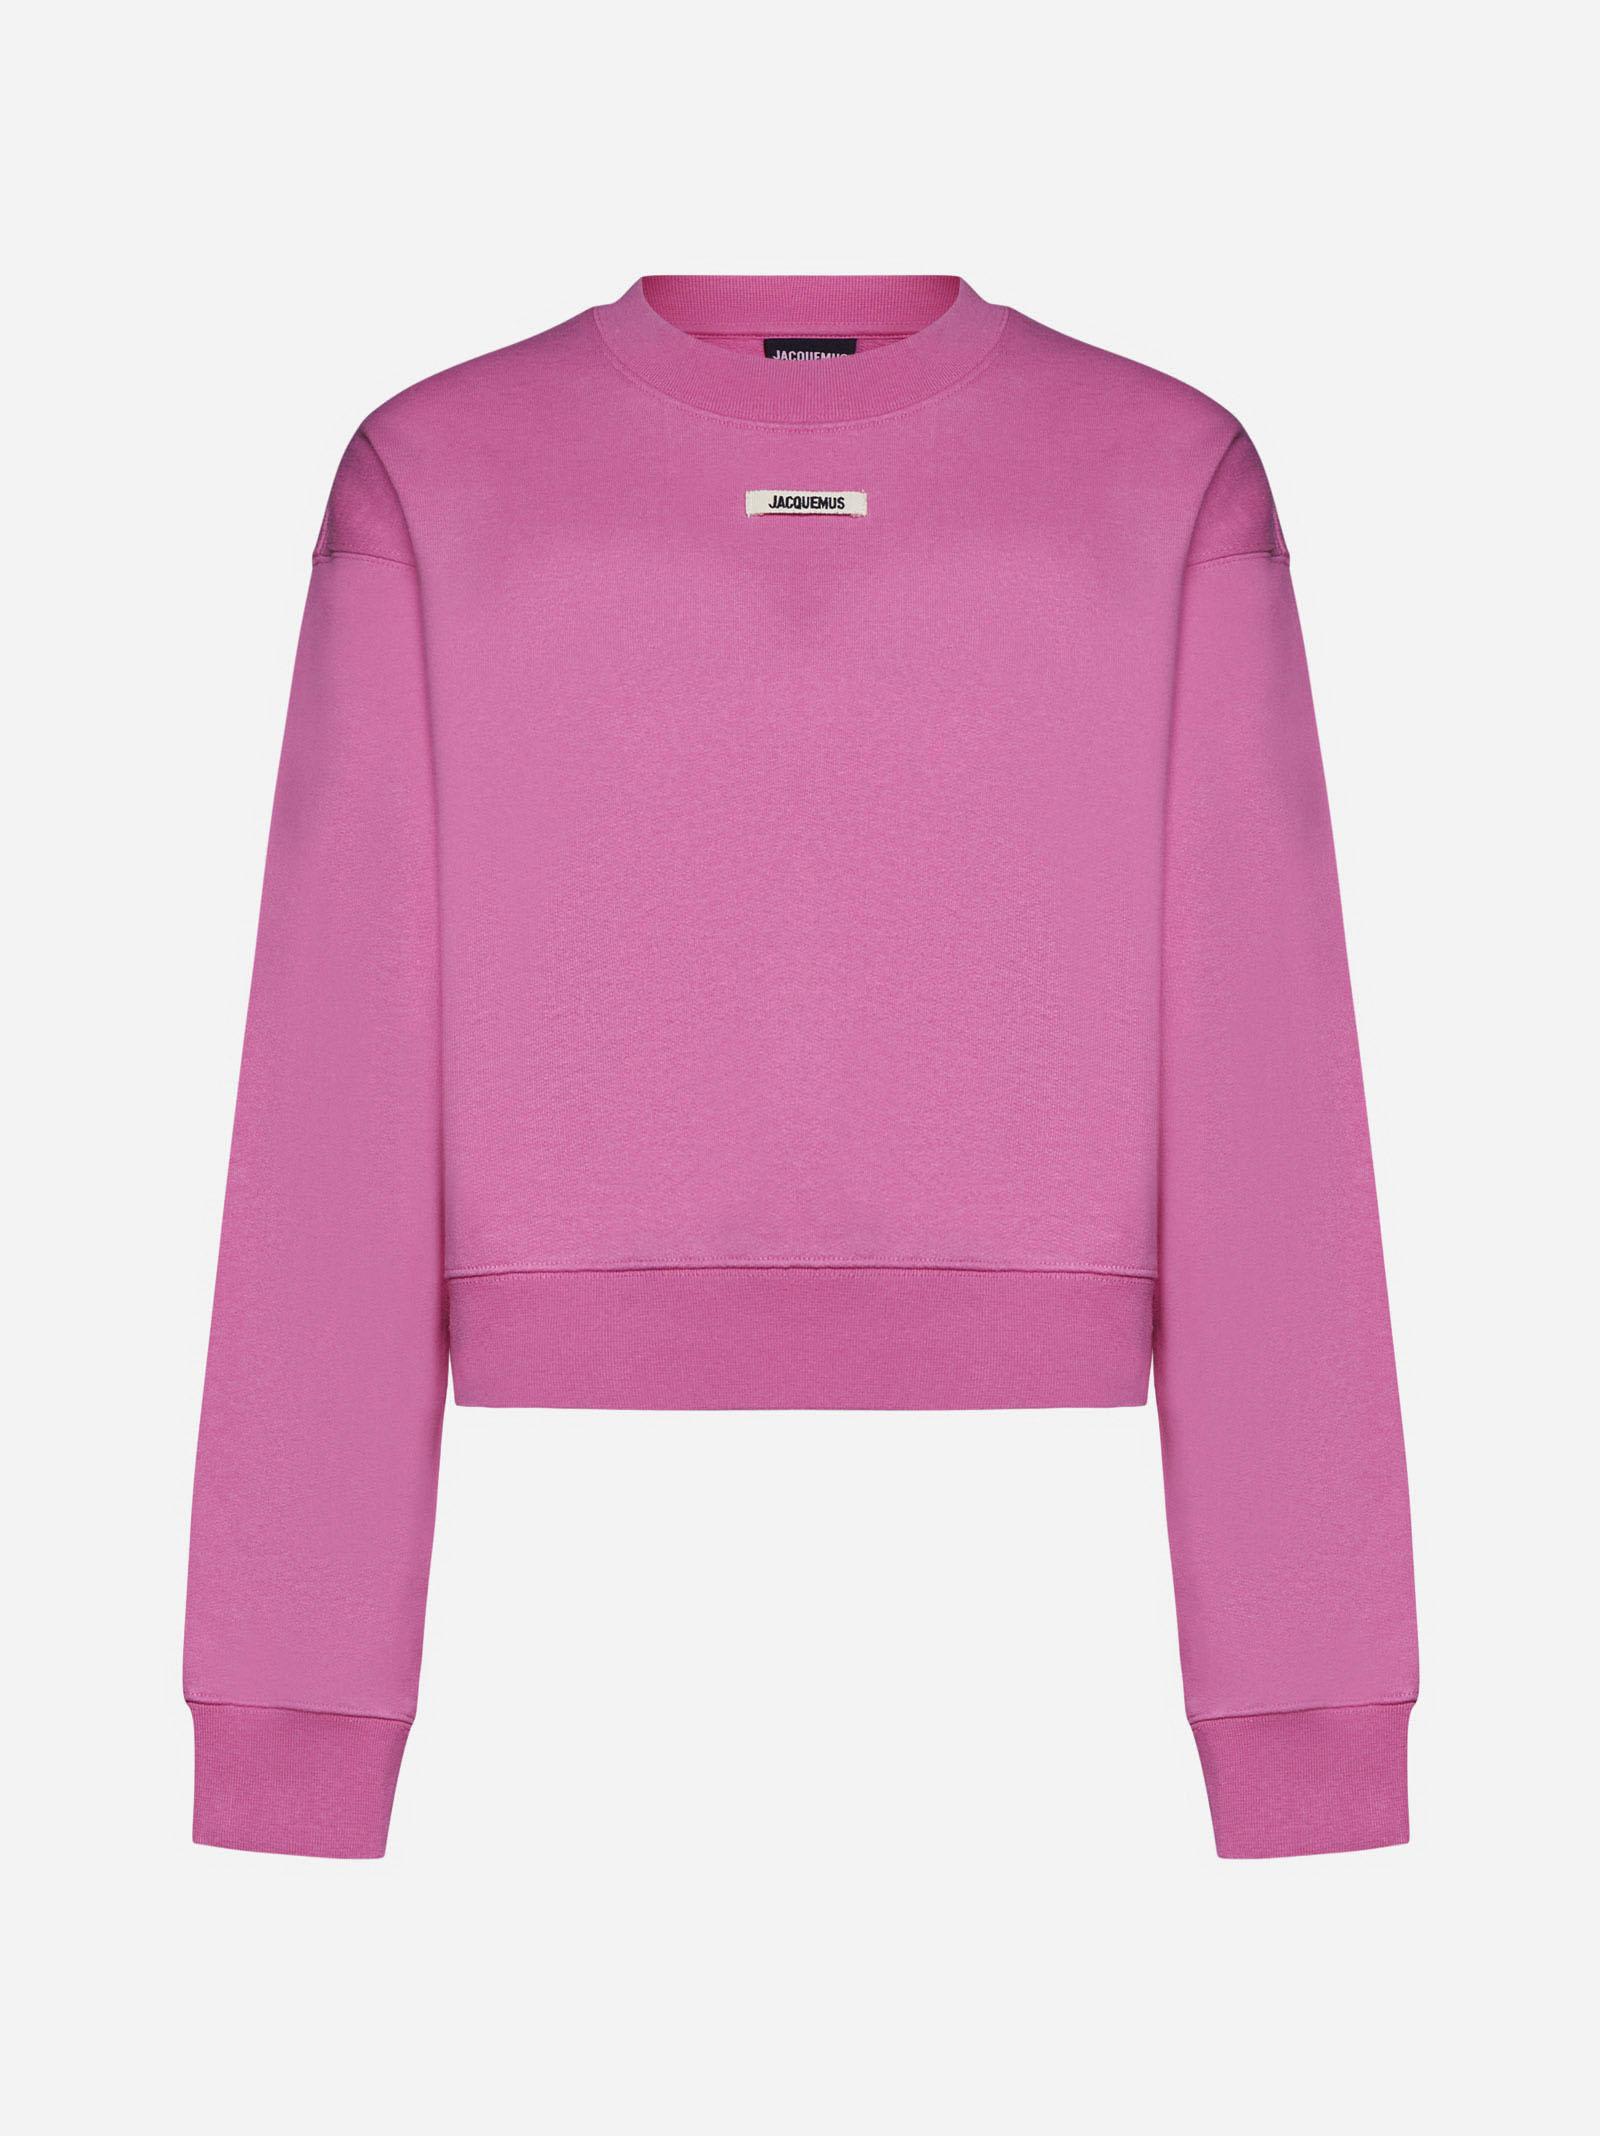 Shop Jacquemus Gros Grain Cotton Sweatshirt In Pink 2